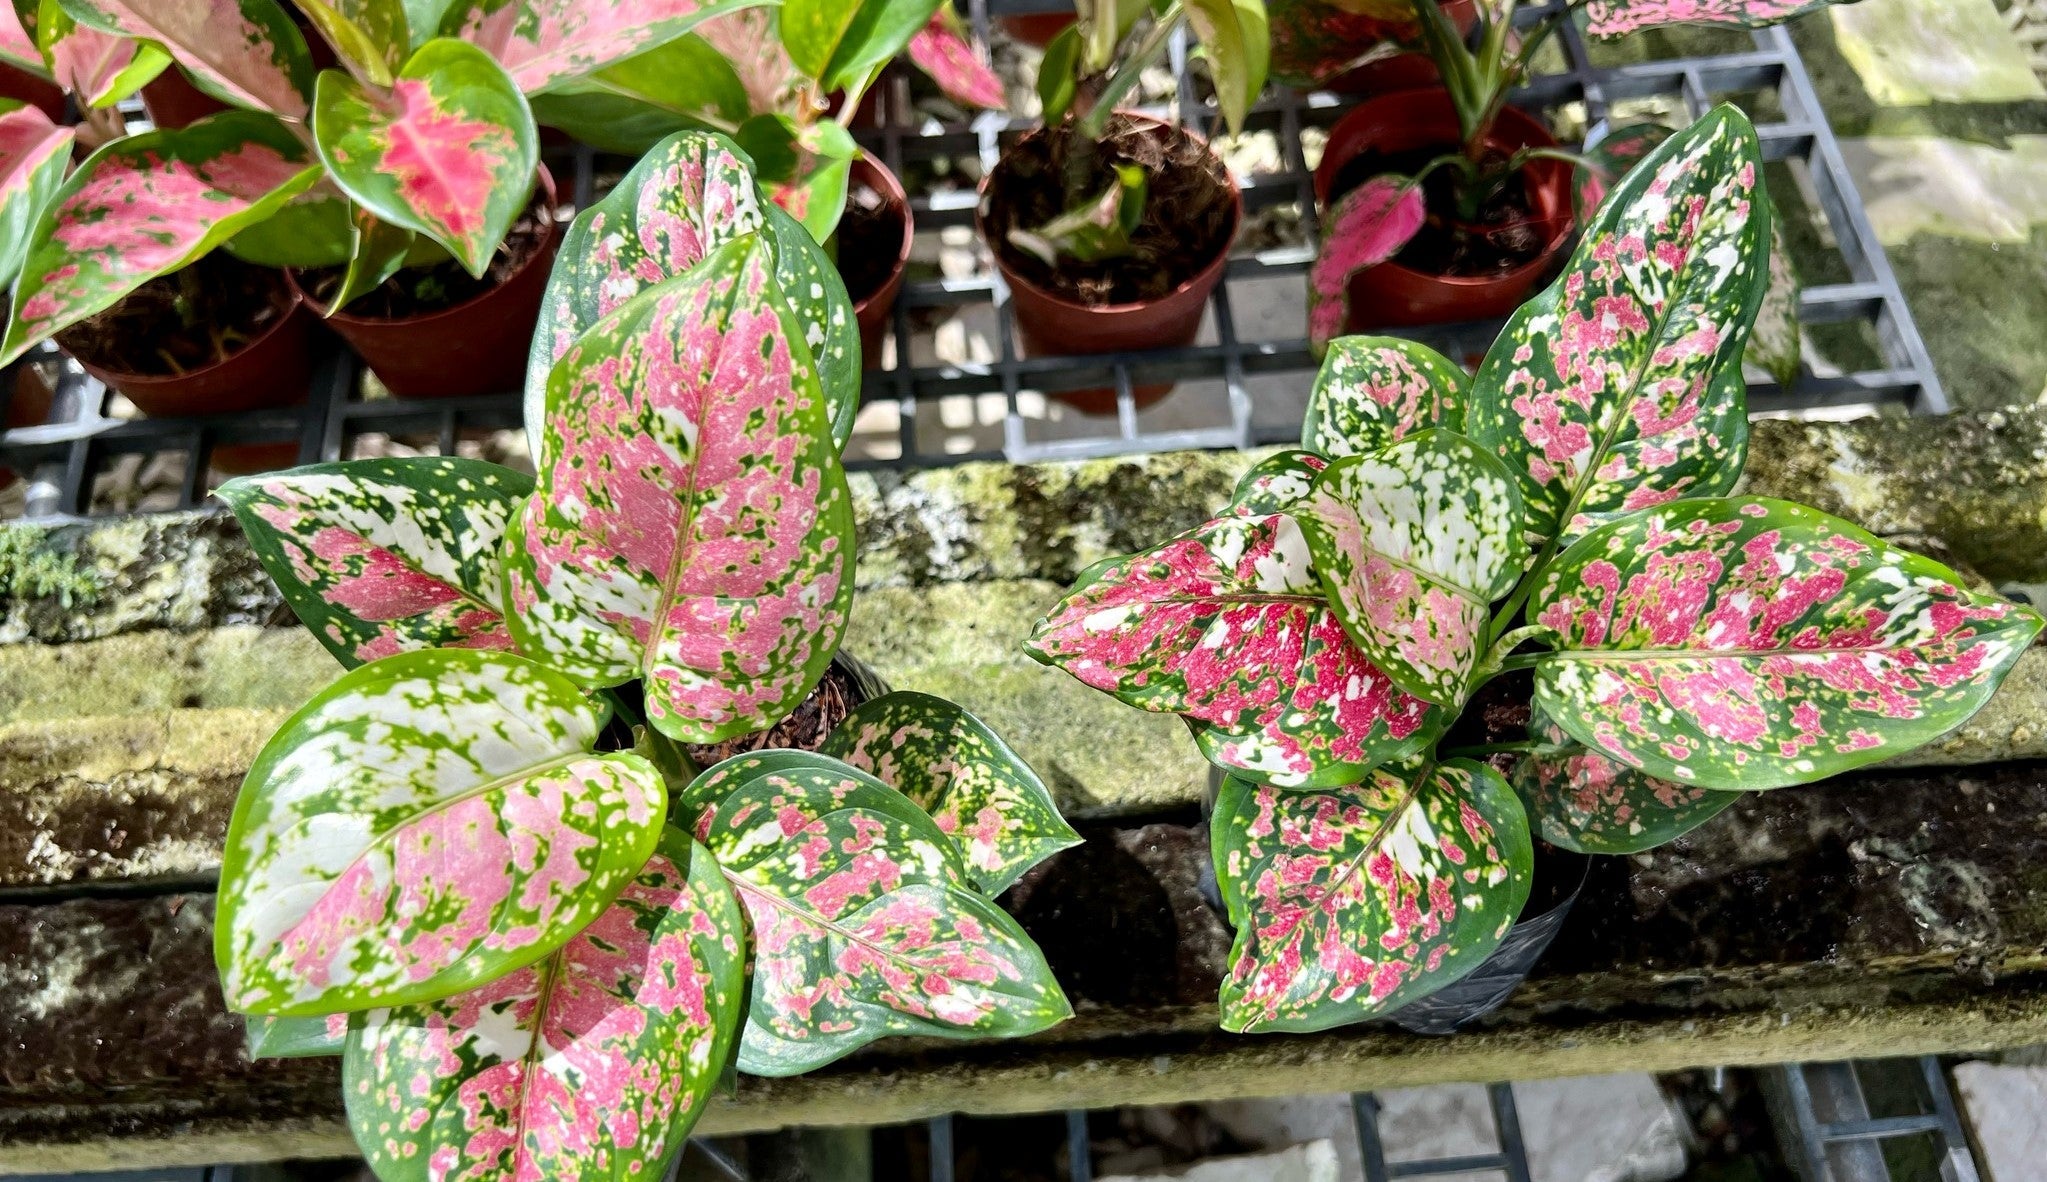 Aglaonema Tricolor - Pots For Plants